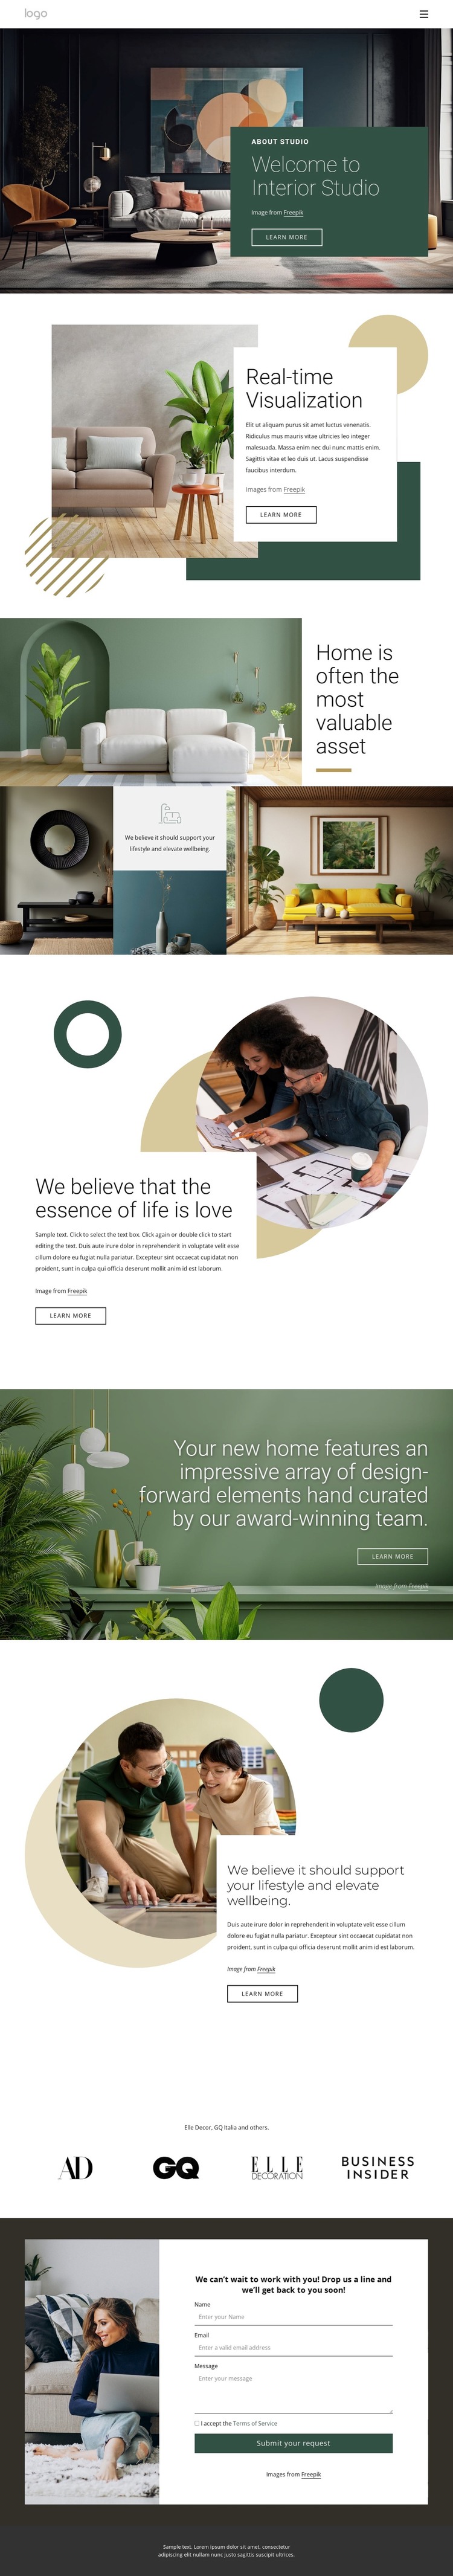 Award-winning interior design studio WordPress Theme